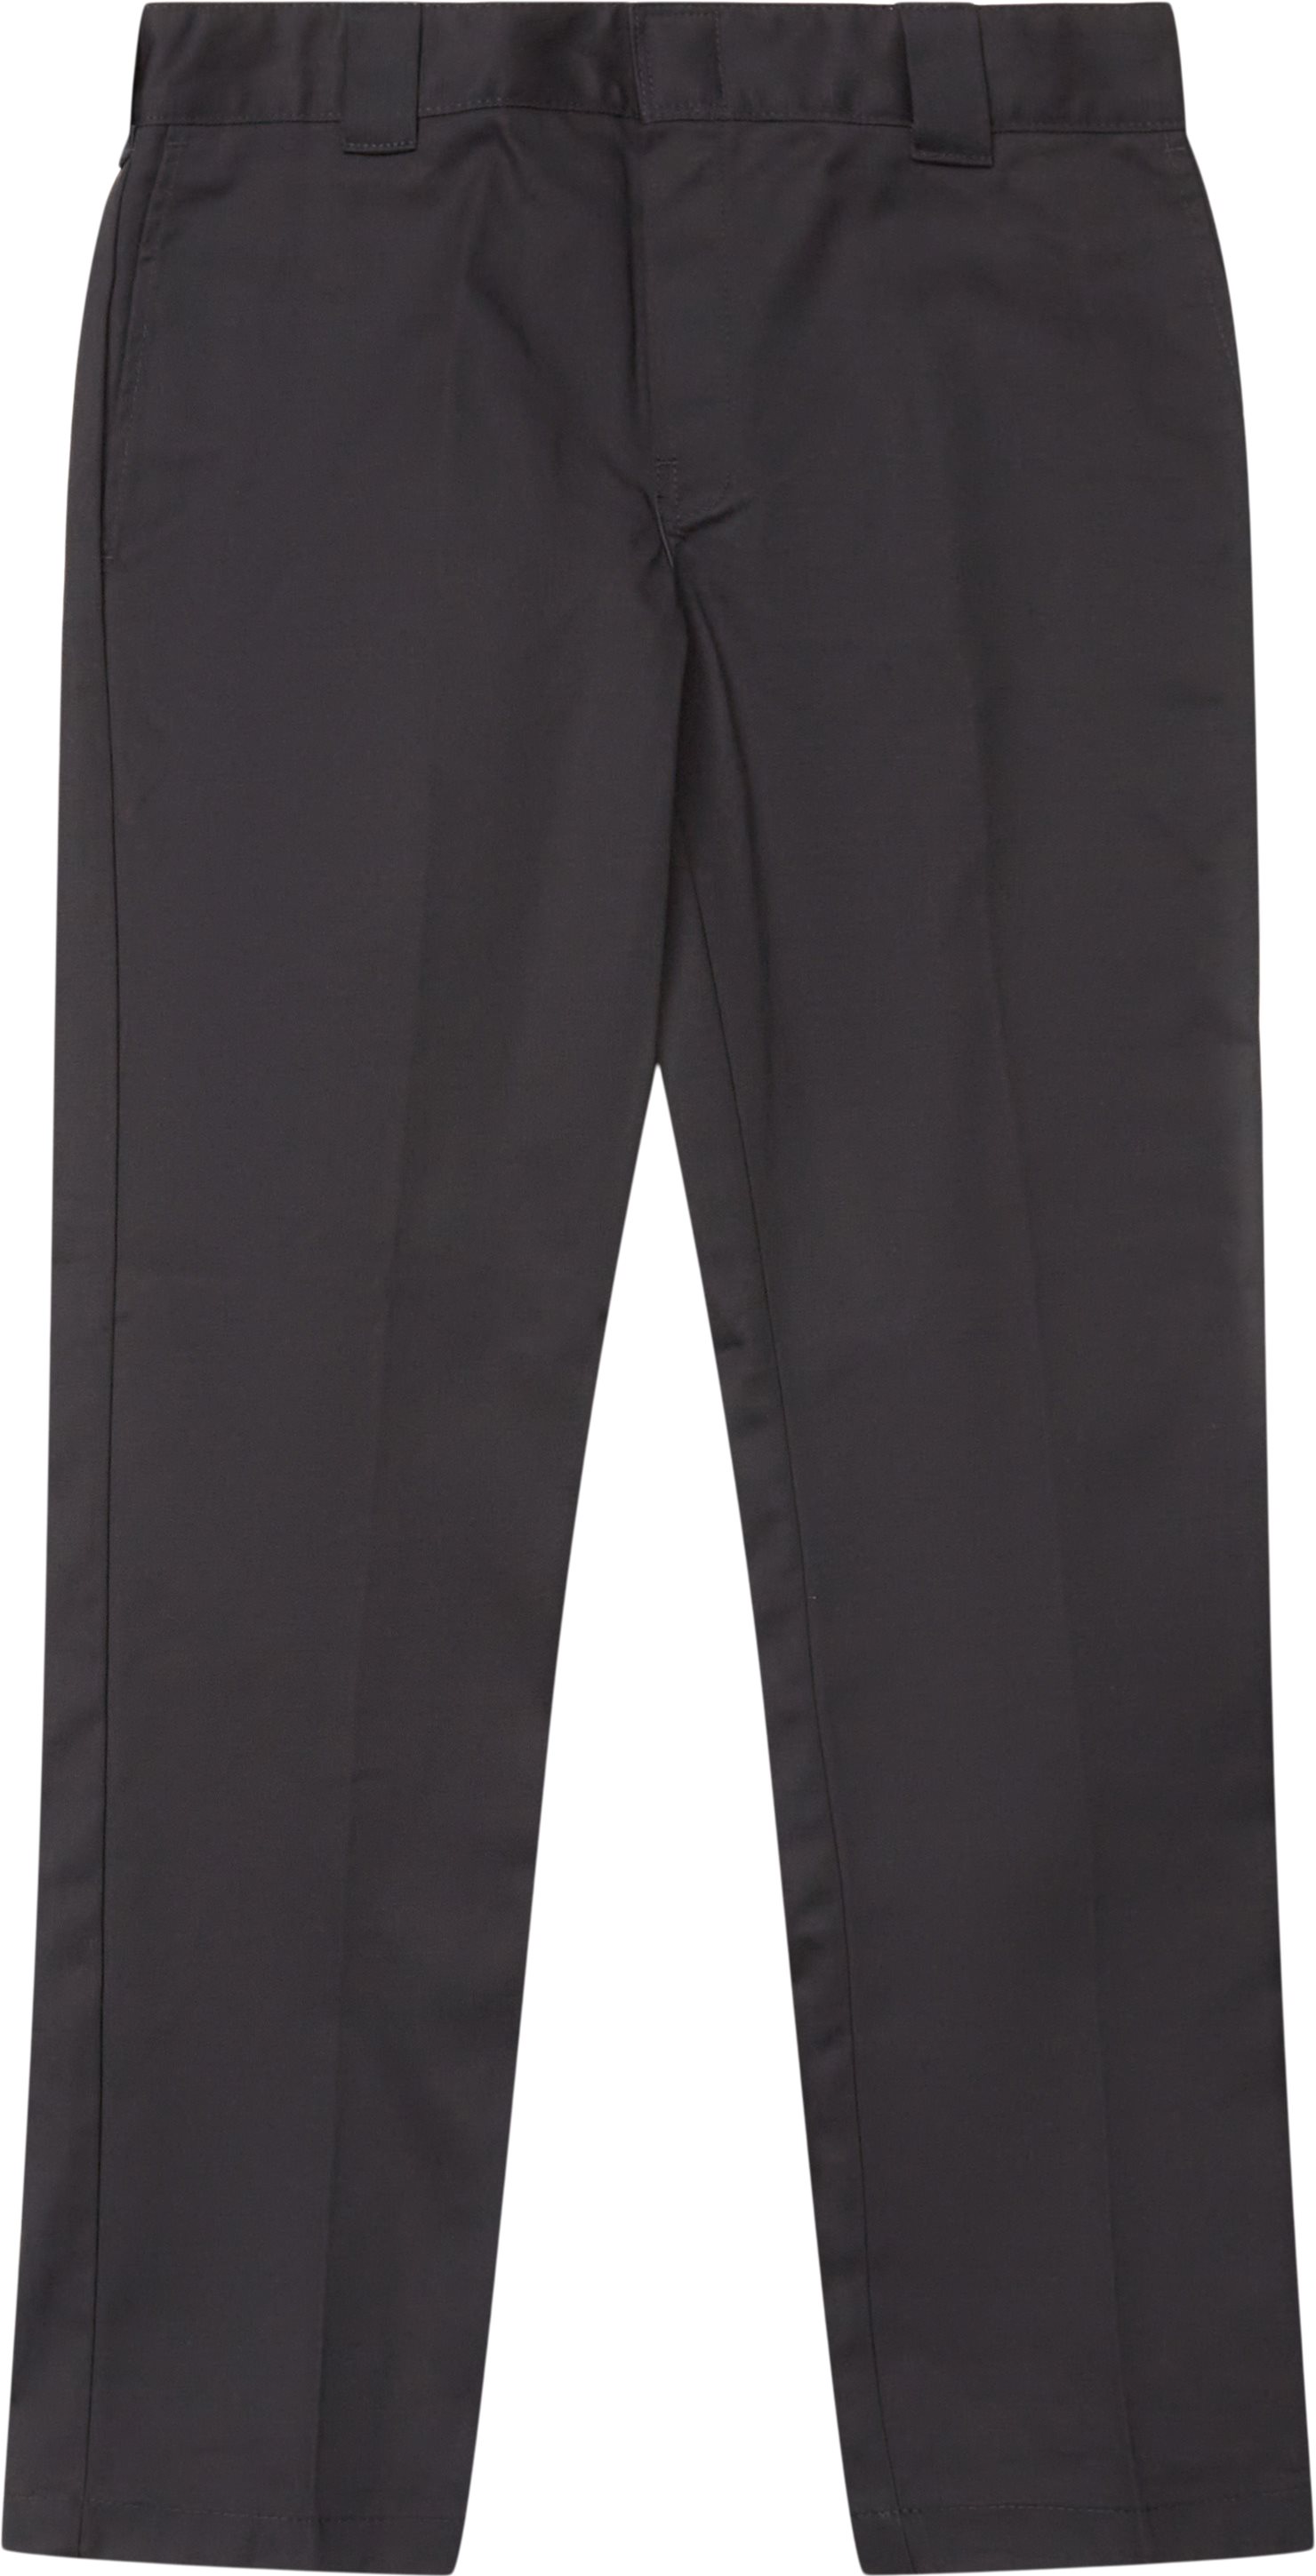 873 Work Pant - Trousers - Slim fit - Black